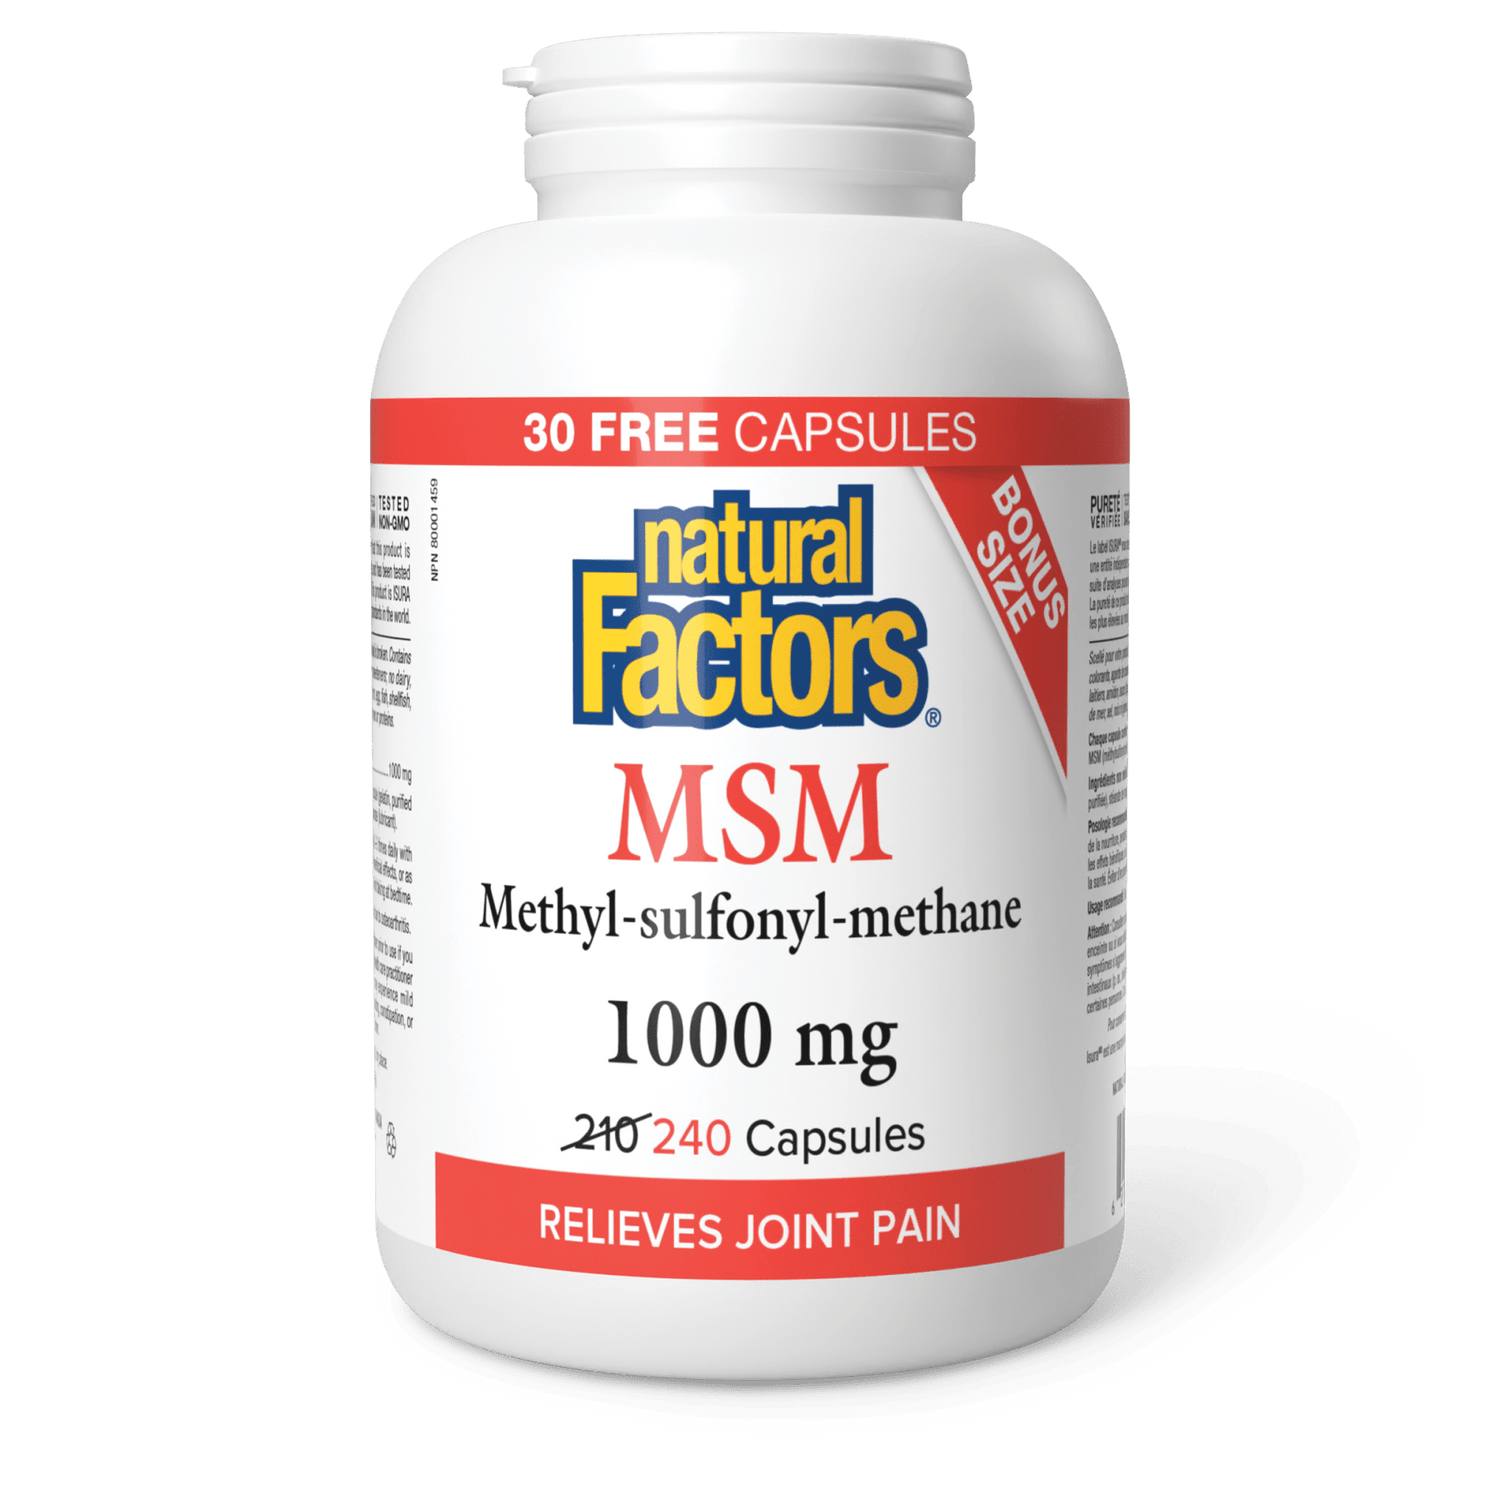 MSM Methyl-sulfonyl-methane 1000 mg, Natural Factors|v|image|8653